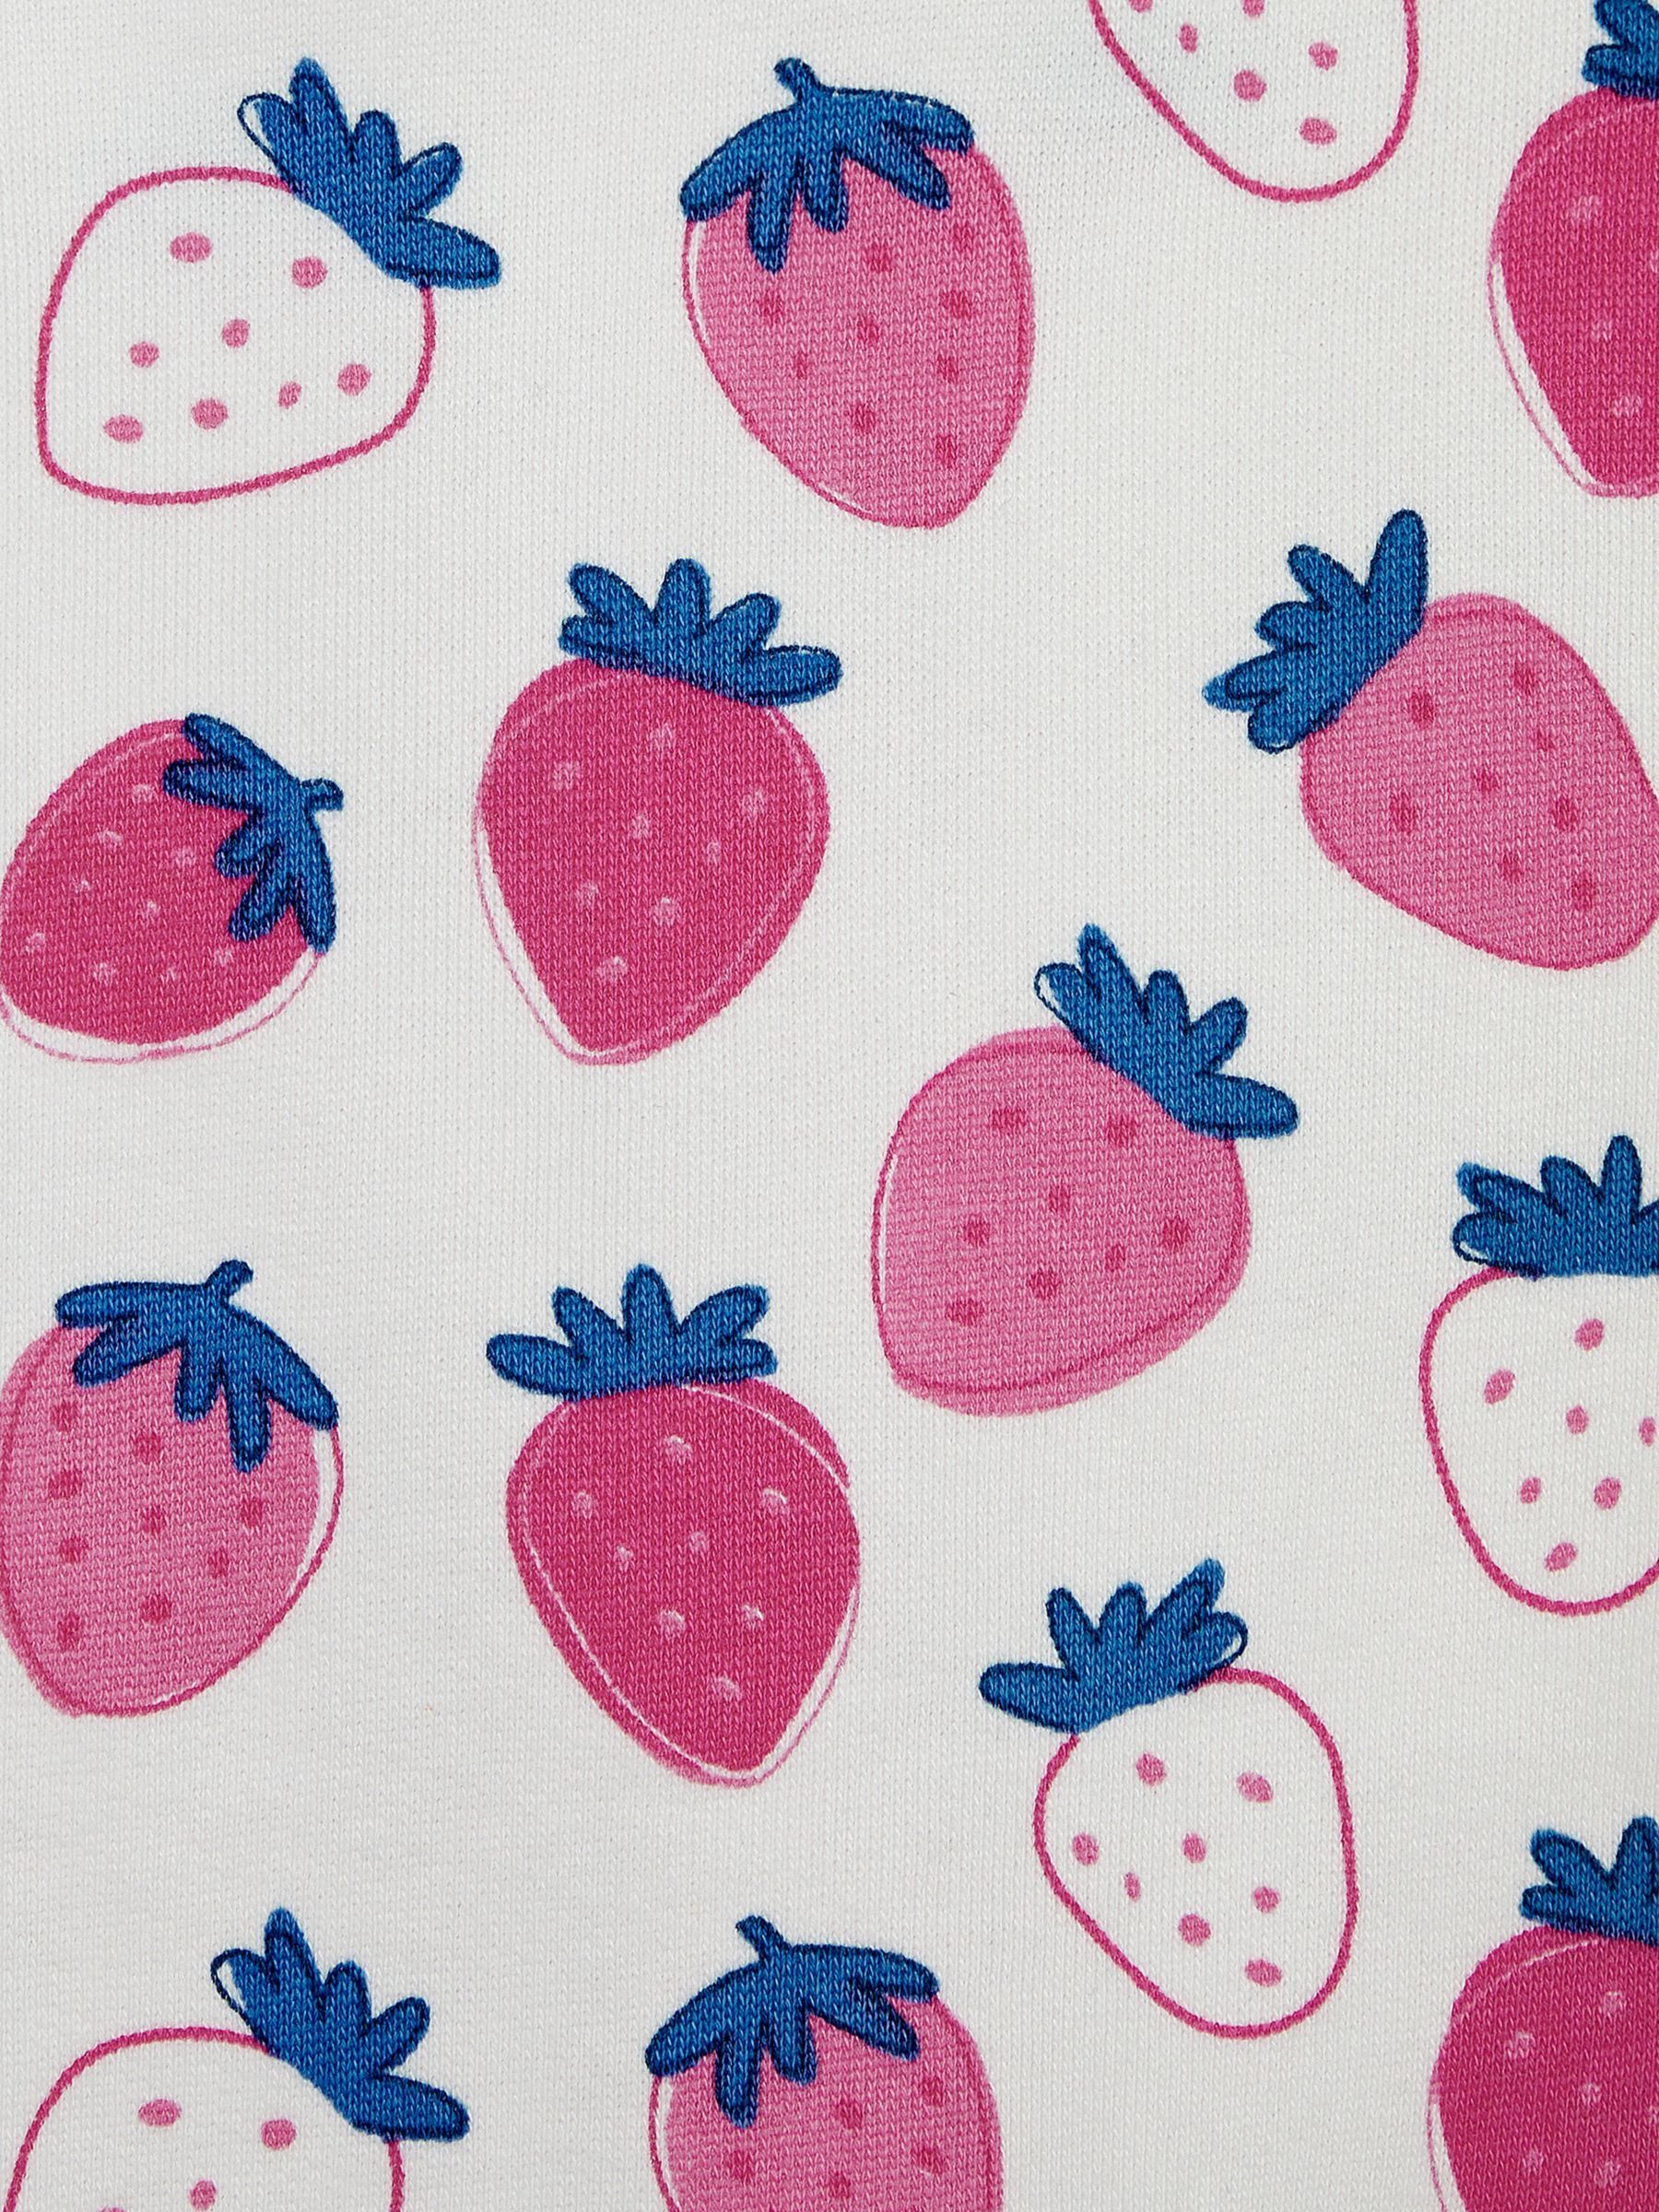 JoJo Maman Bébé Baby Strawberry Print Sweatshirt, Cream/Multi, 2-3 years